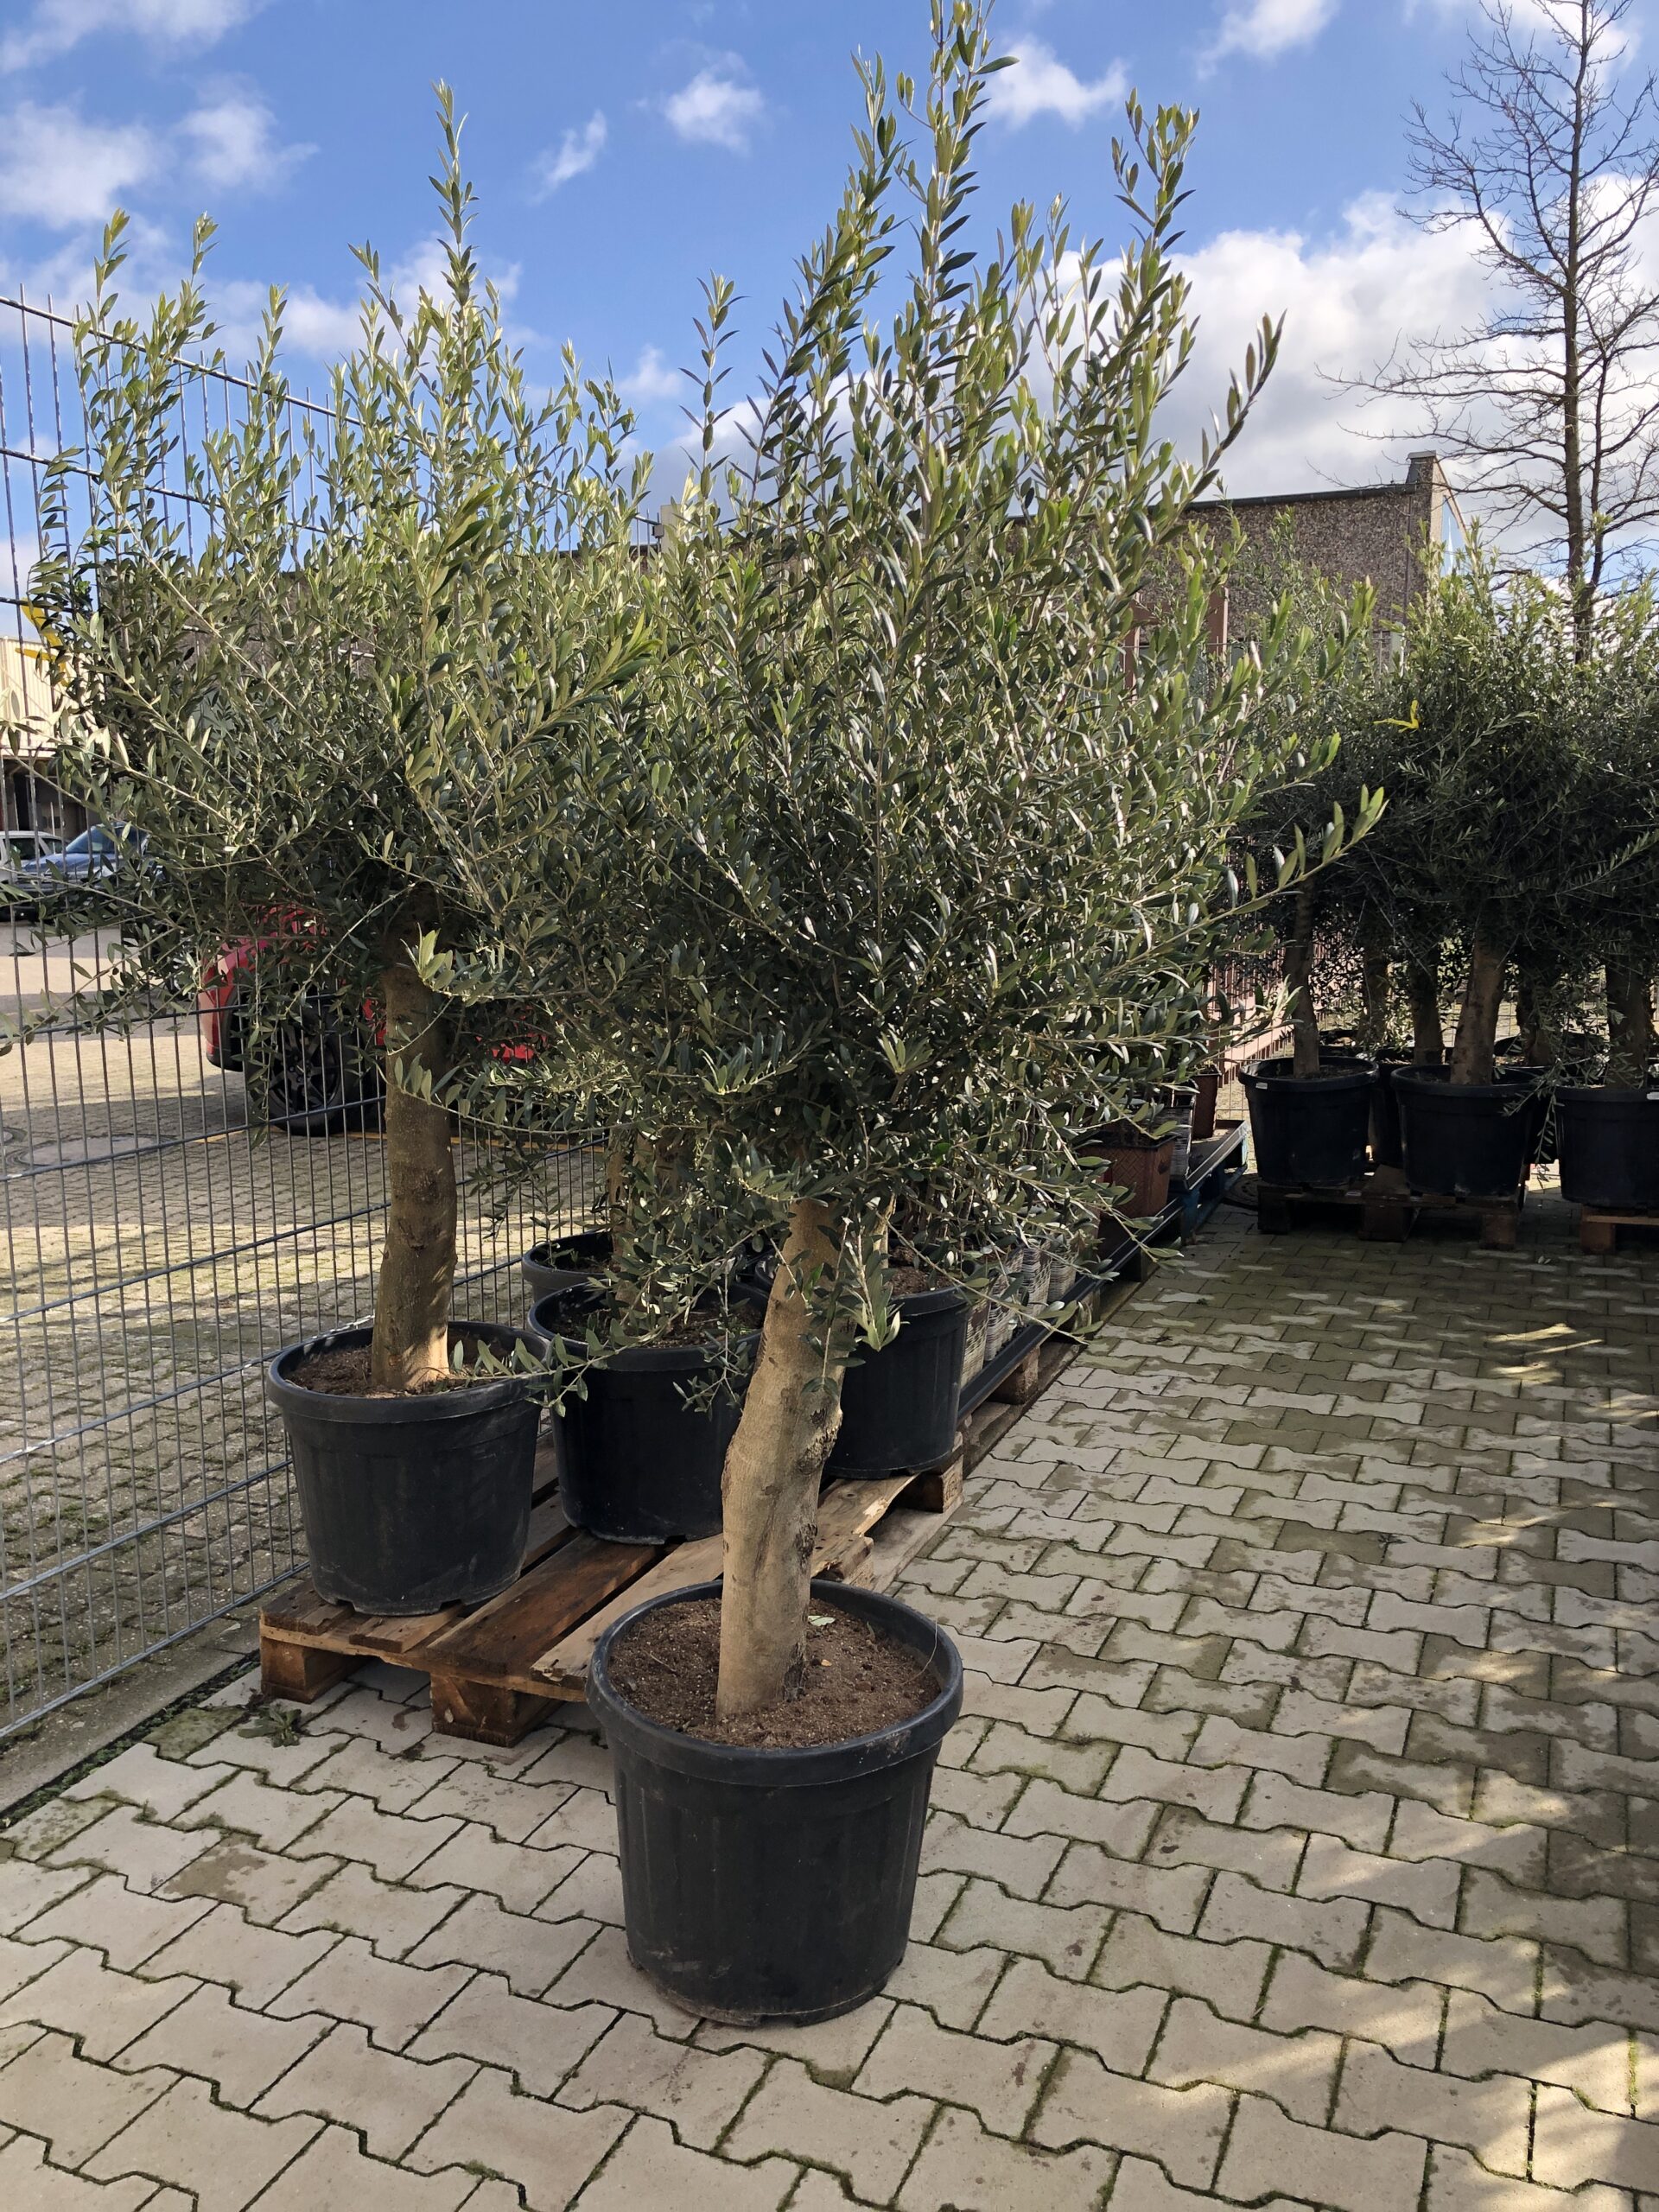 RÄUMUMGSVERKAUF – 3 Olivenbäume kaufen für 250€